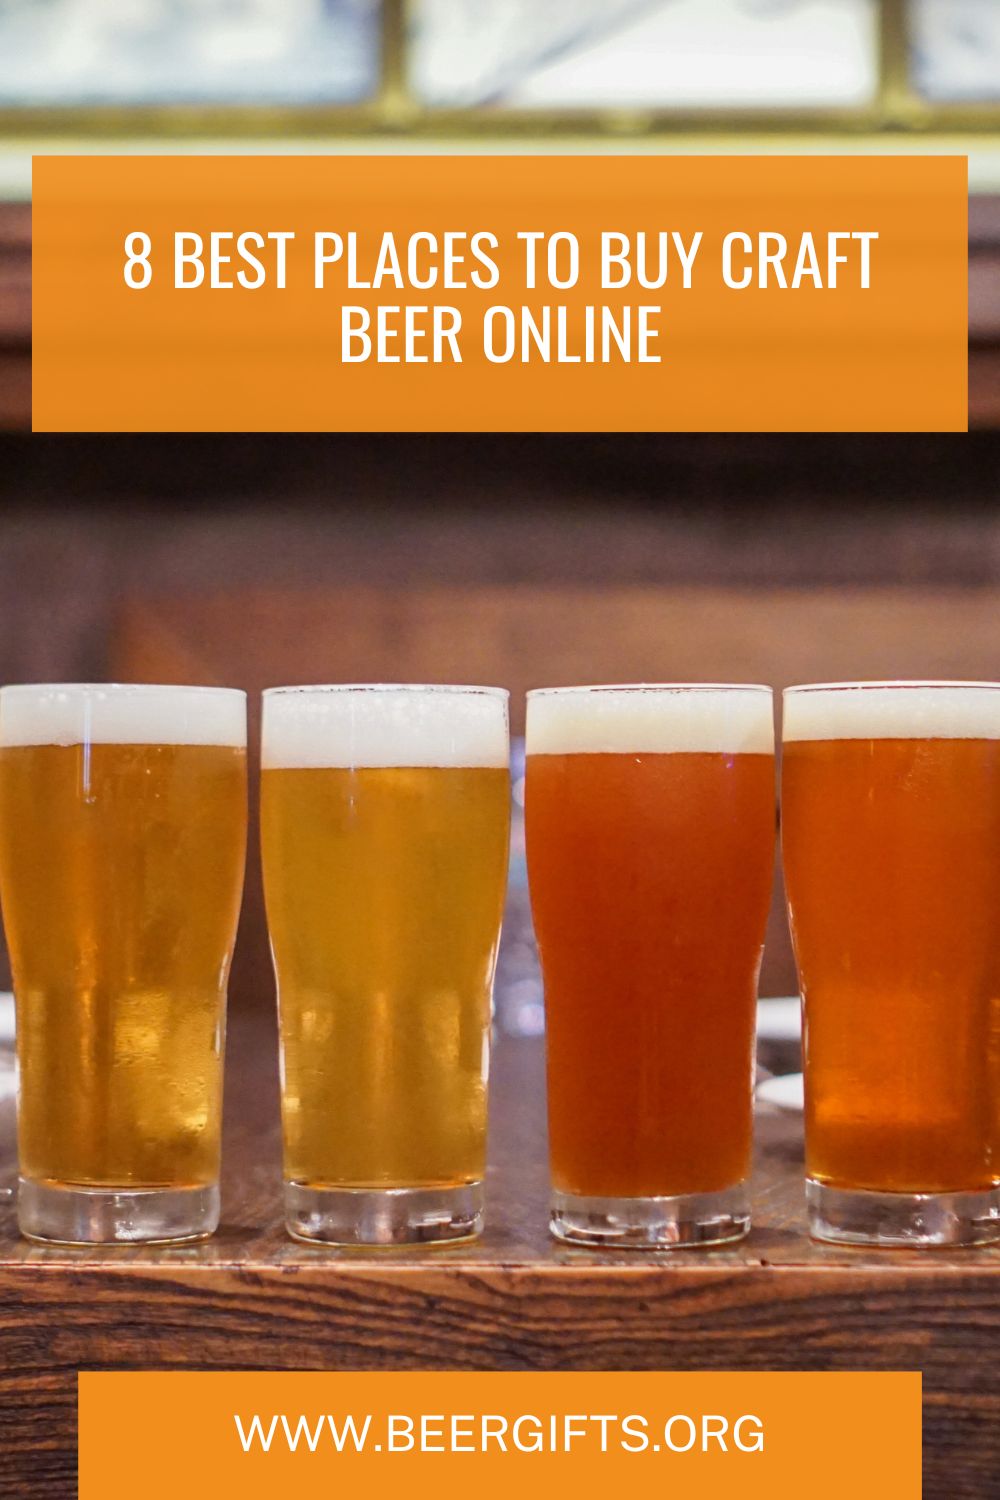 8 Best Places to Buy Craft Beer Online2